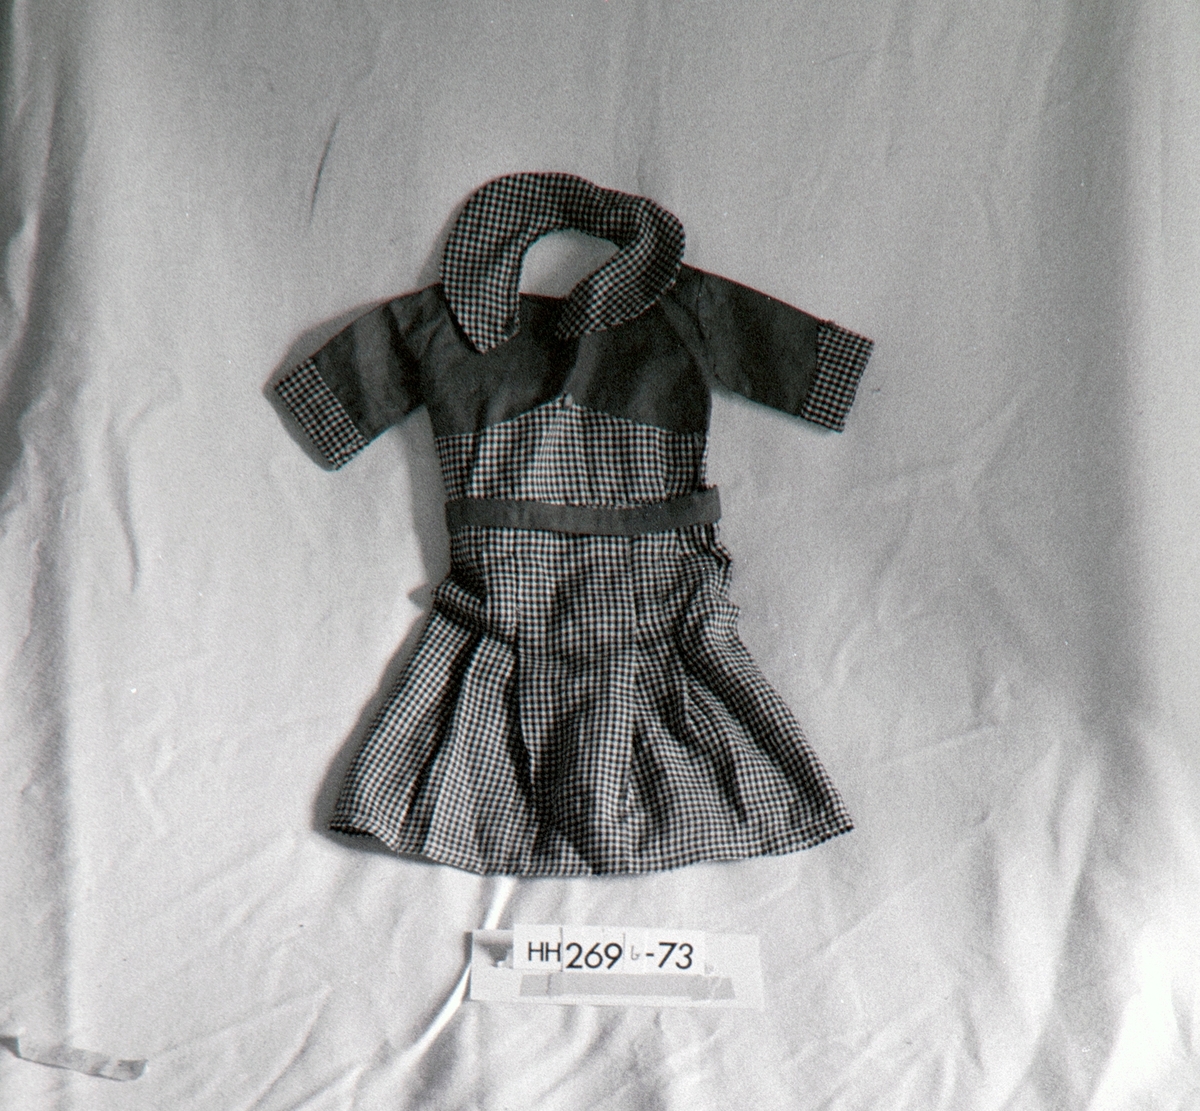 Dukkeklær, tilhører dukken Victoria HH.1973-0268.